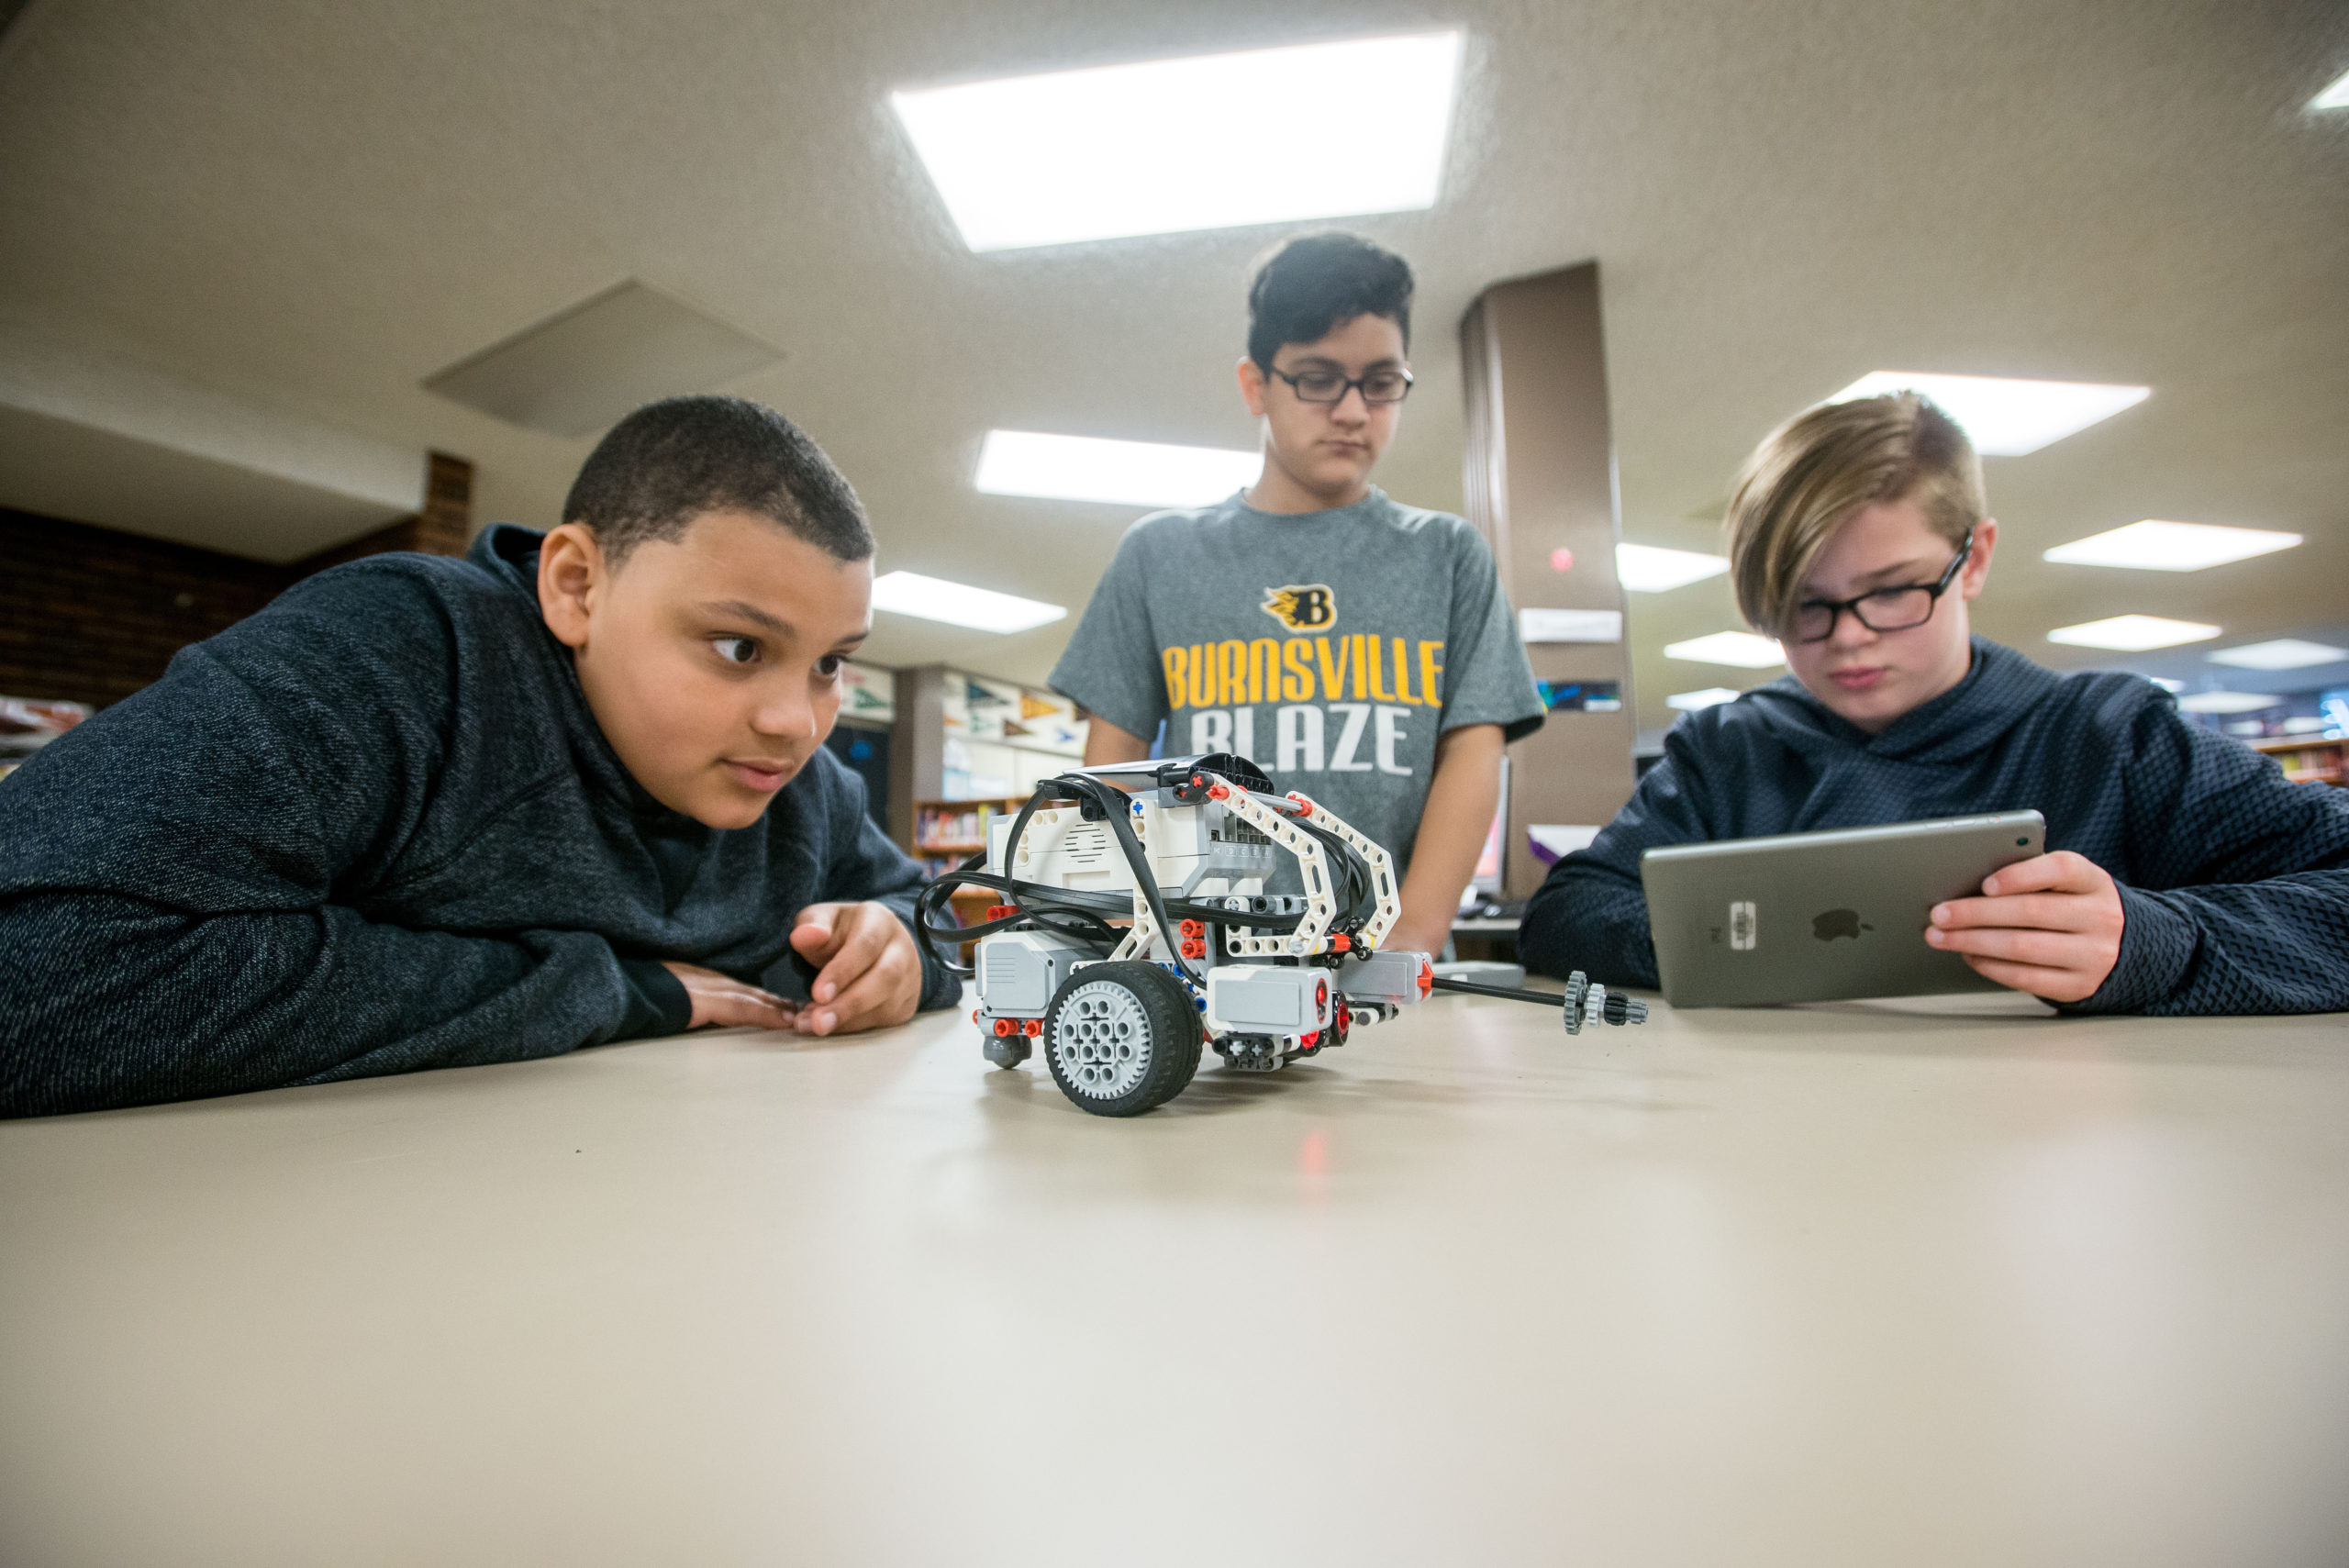 Students in Minnesota's Burnsville-Egan-Savage School District get embedded coding instruction in career pathway programs. 